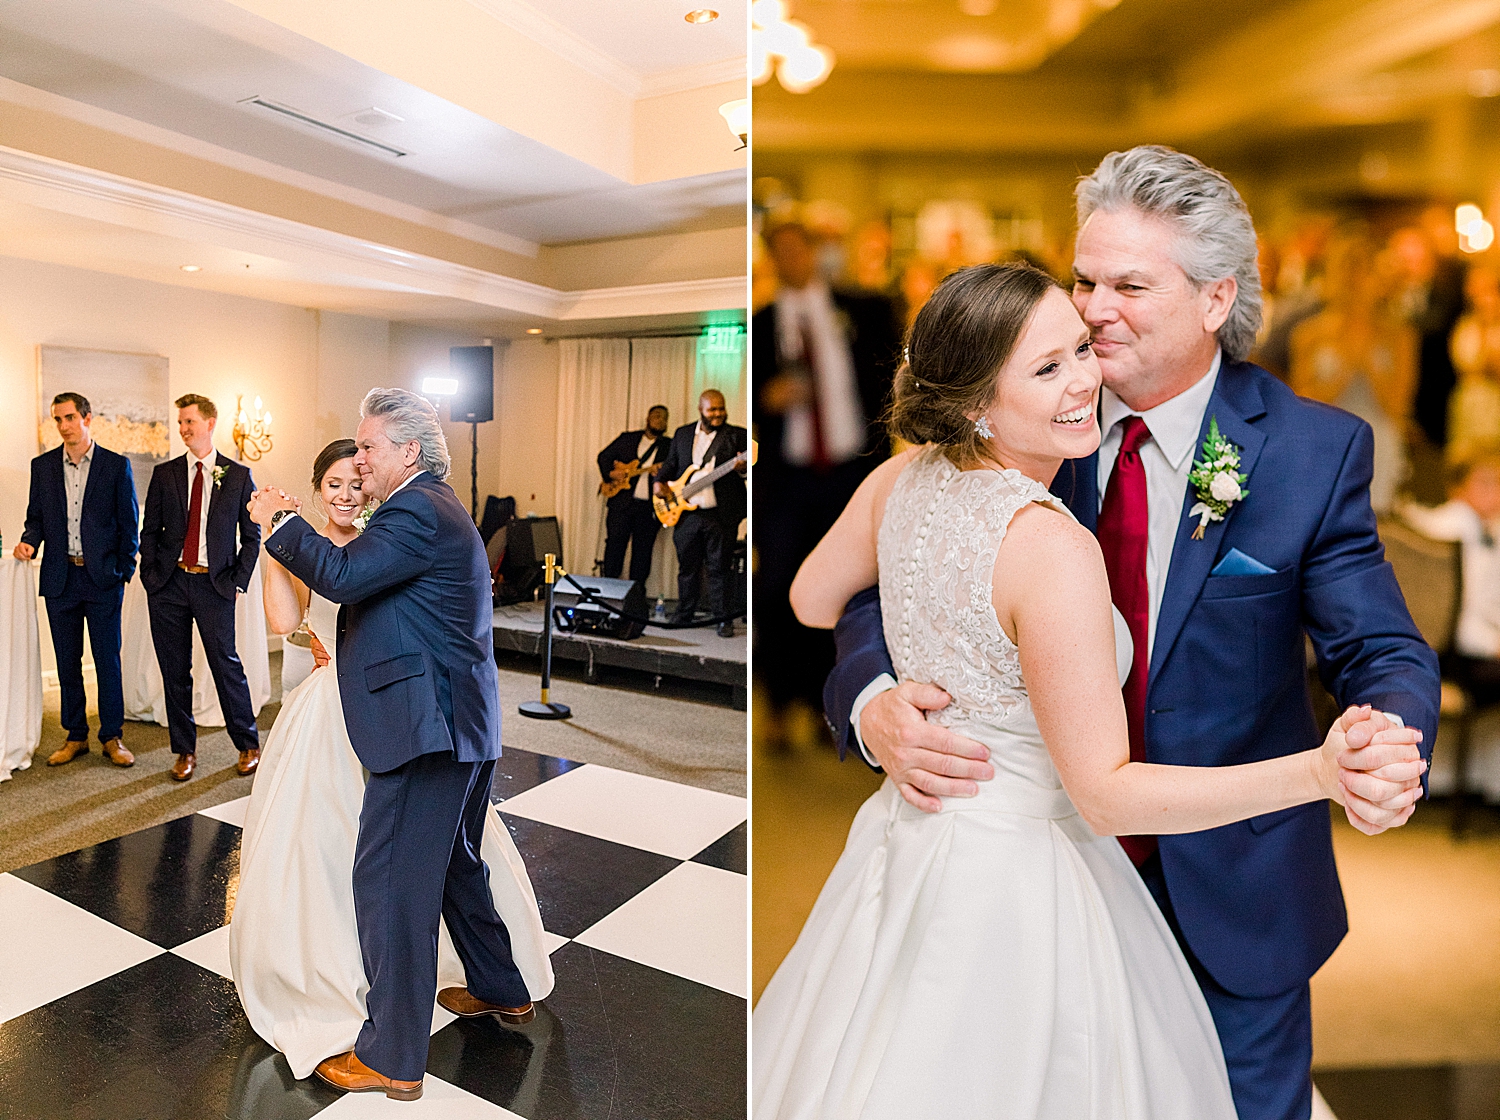 father and bride dance together at Birmingham AL wedding reception